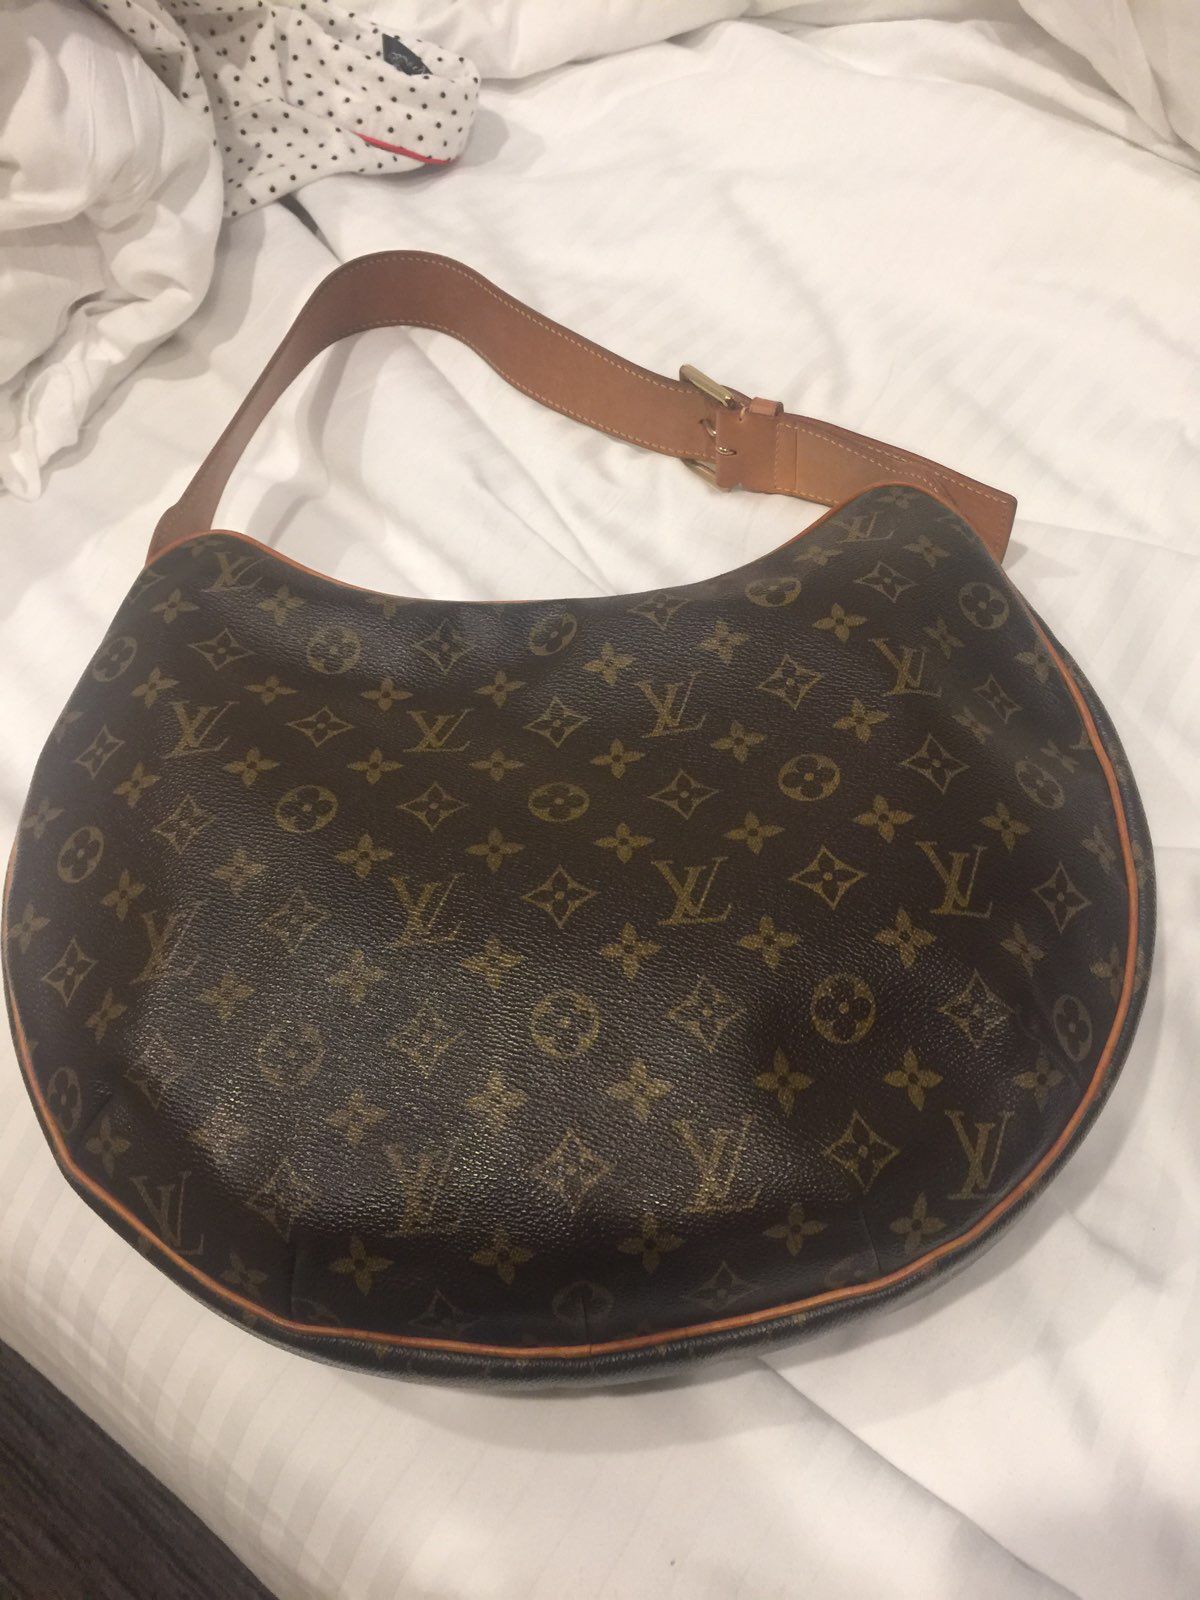 LV bag authentic